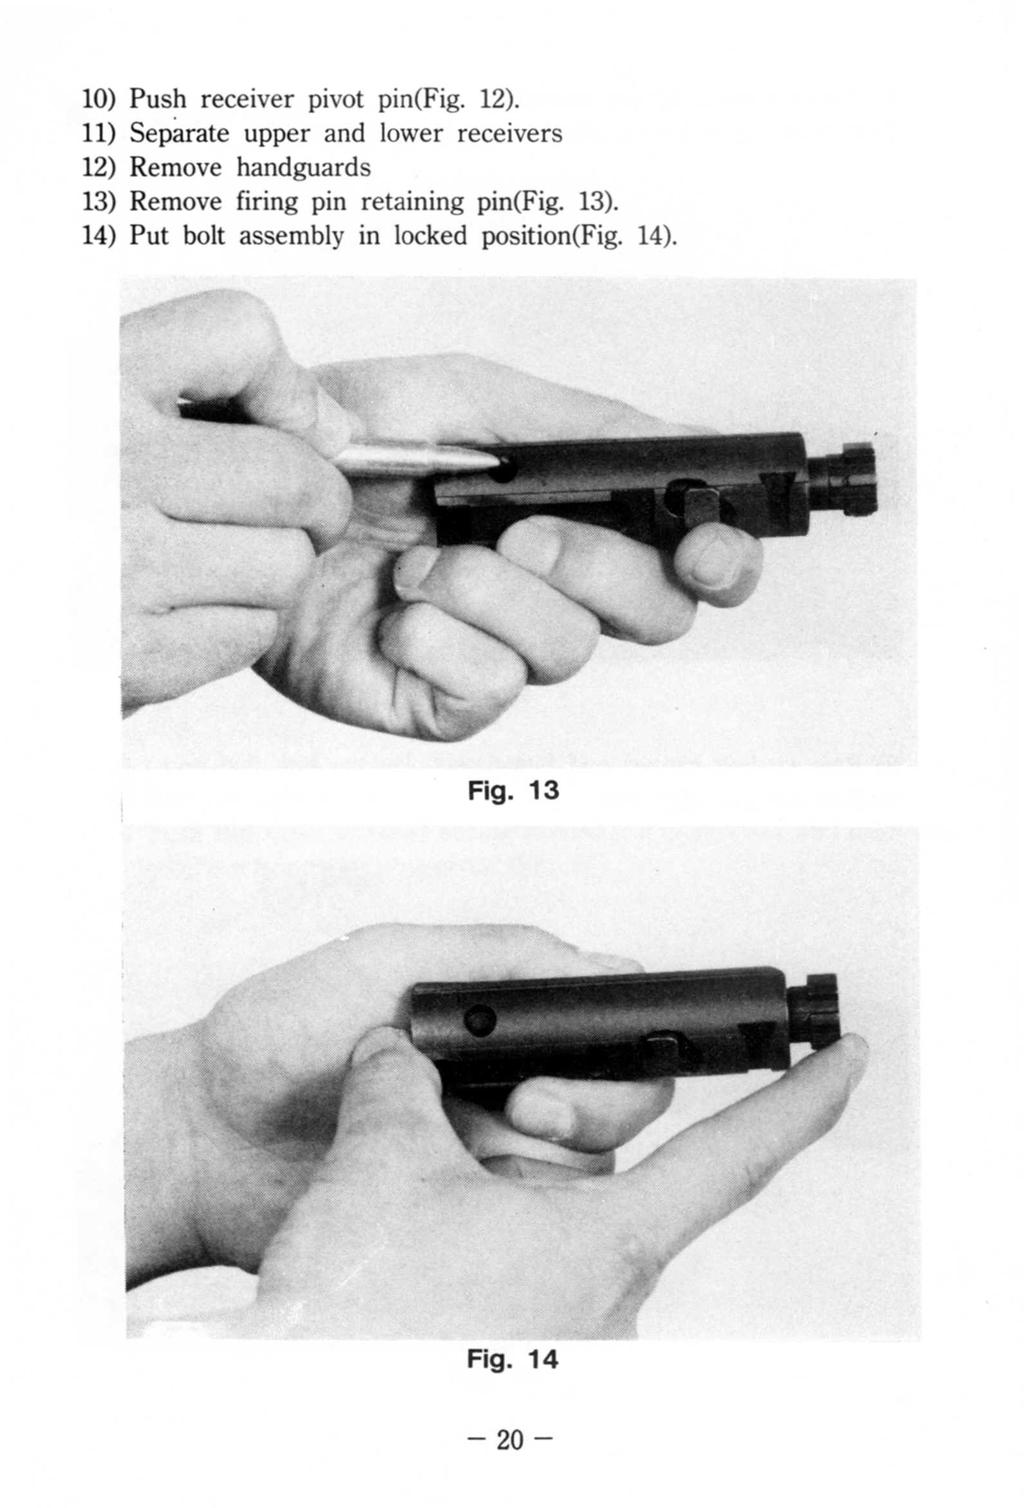 10) Push receiver pivot pin (Fig. 12).